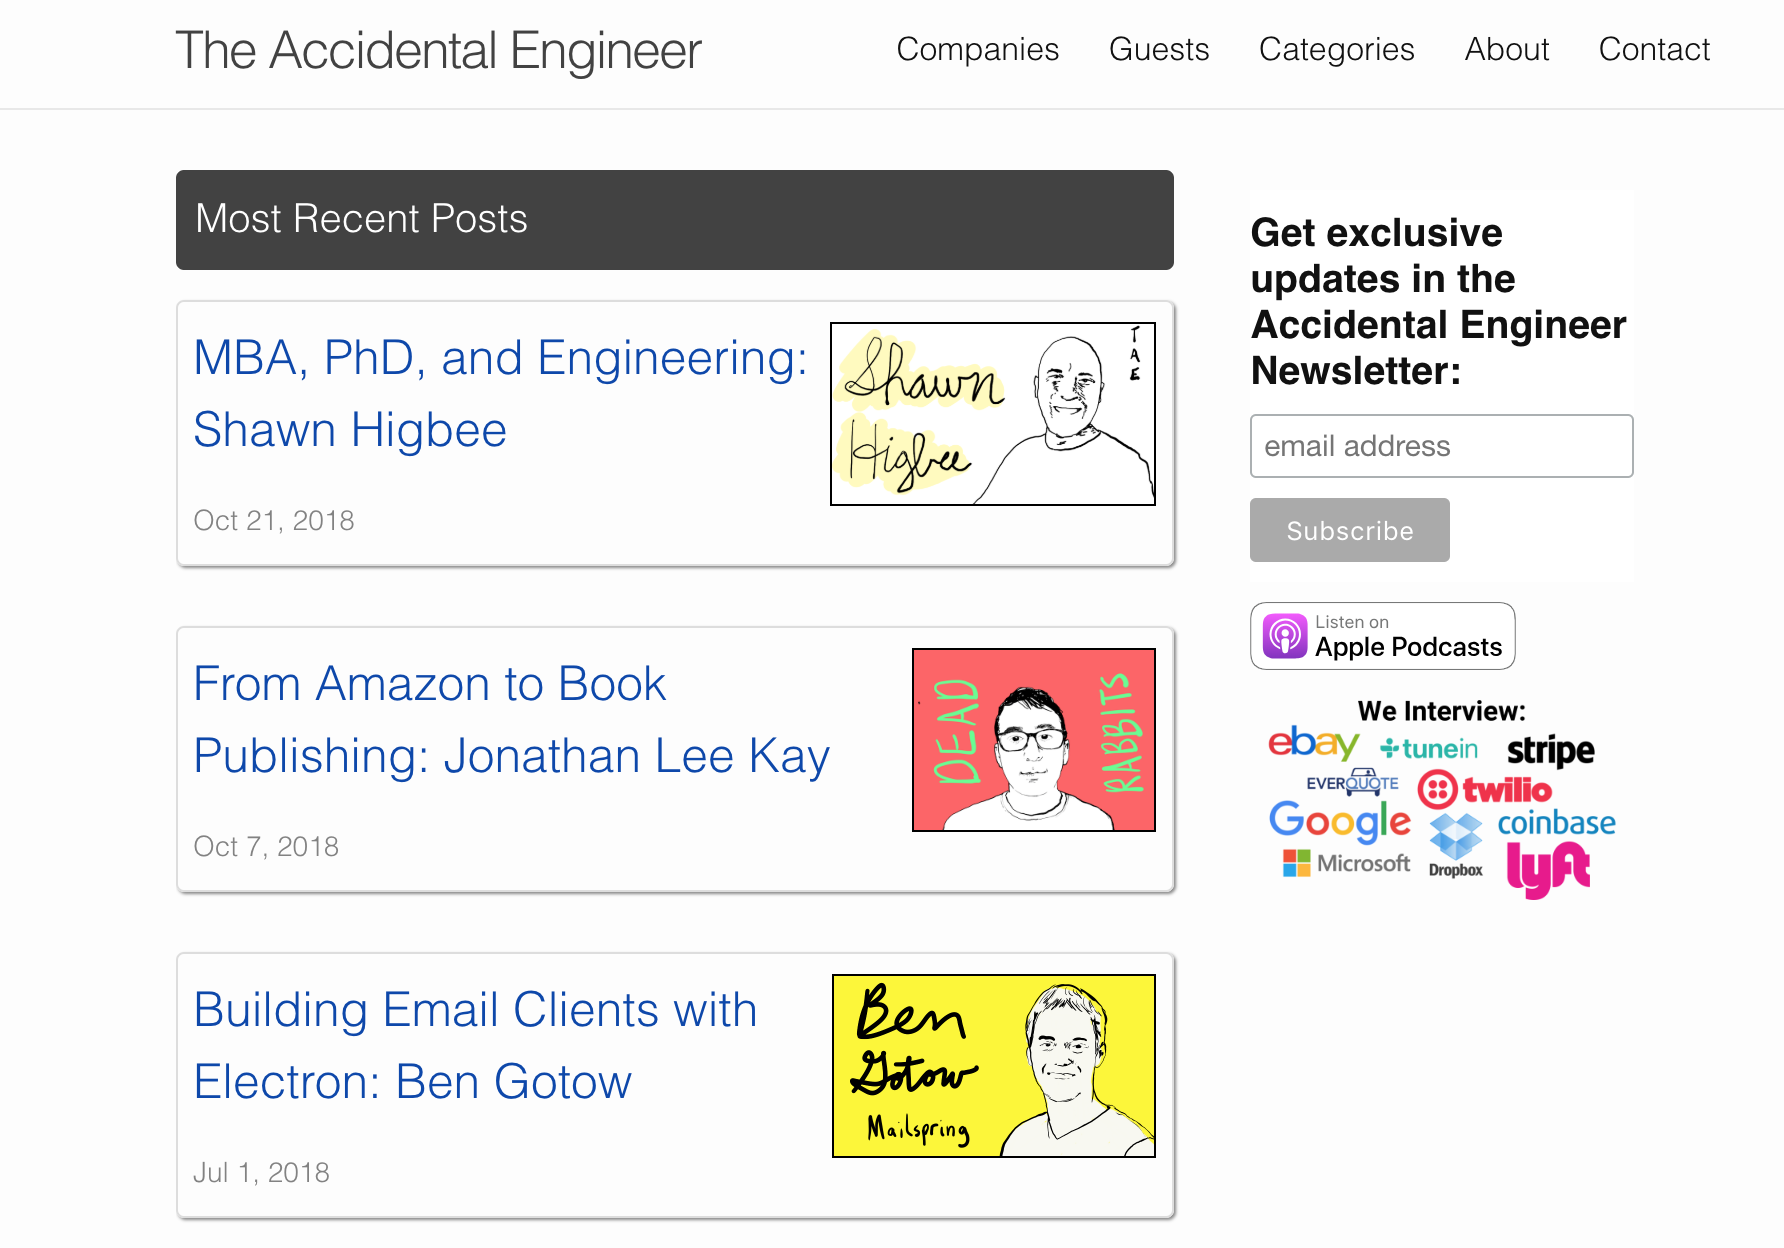 The Accidental Engineer homepage